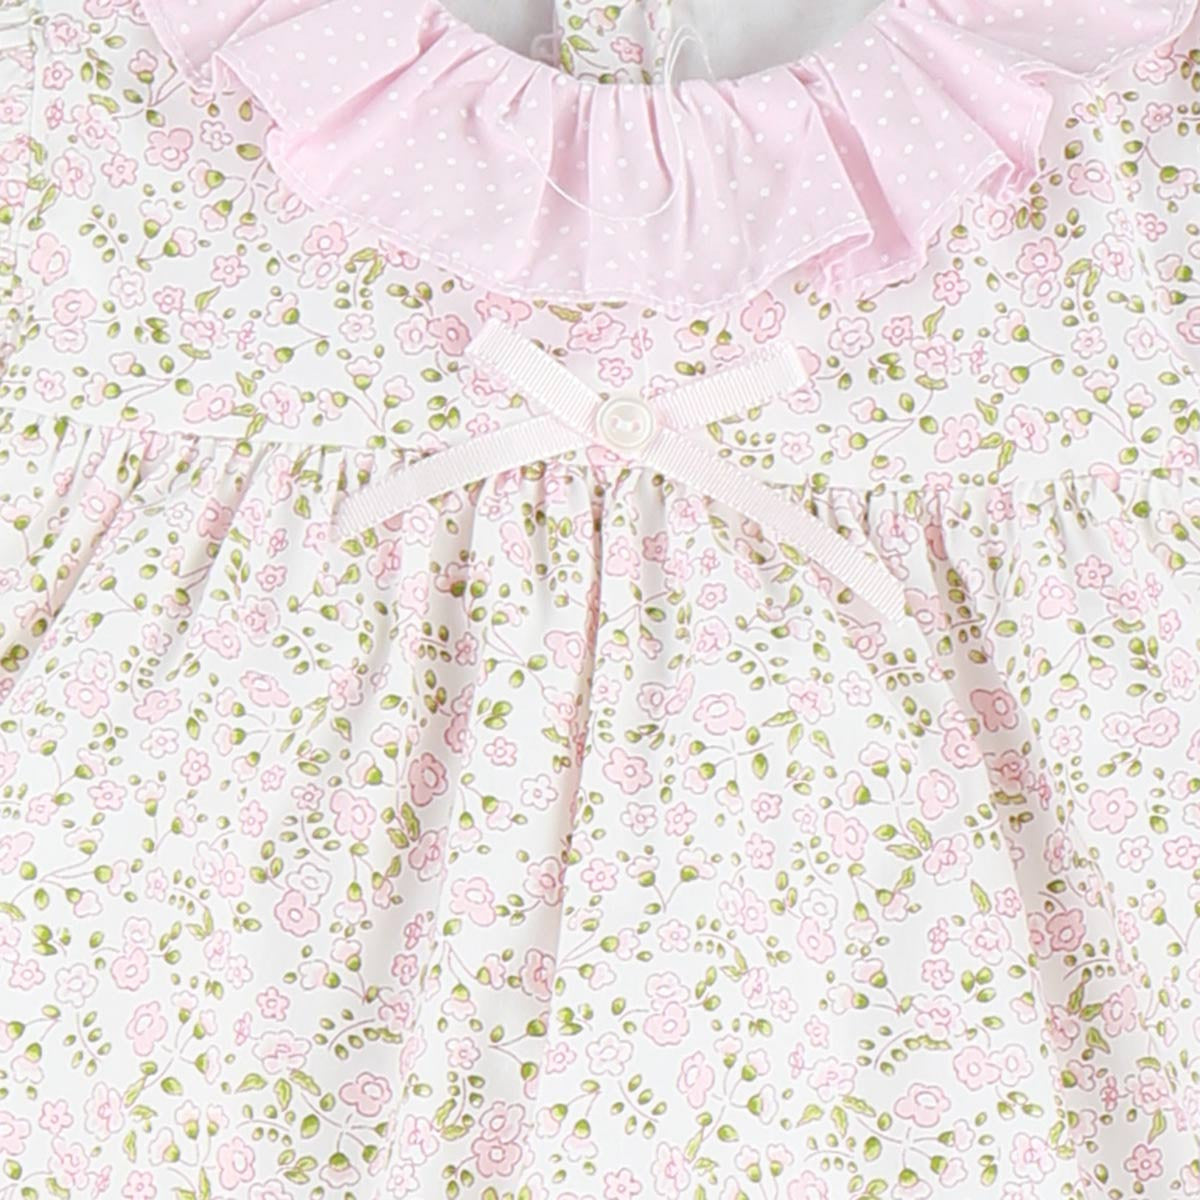 Eliza baby pink ditsy print dress set